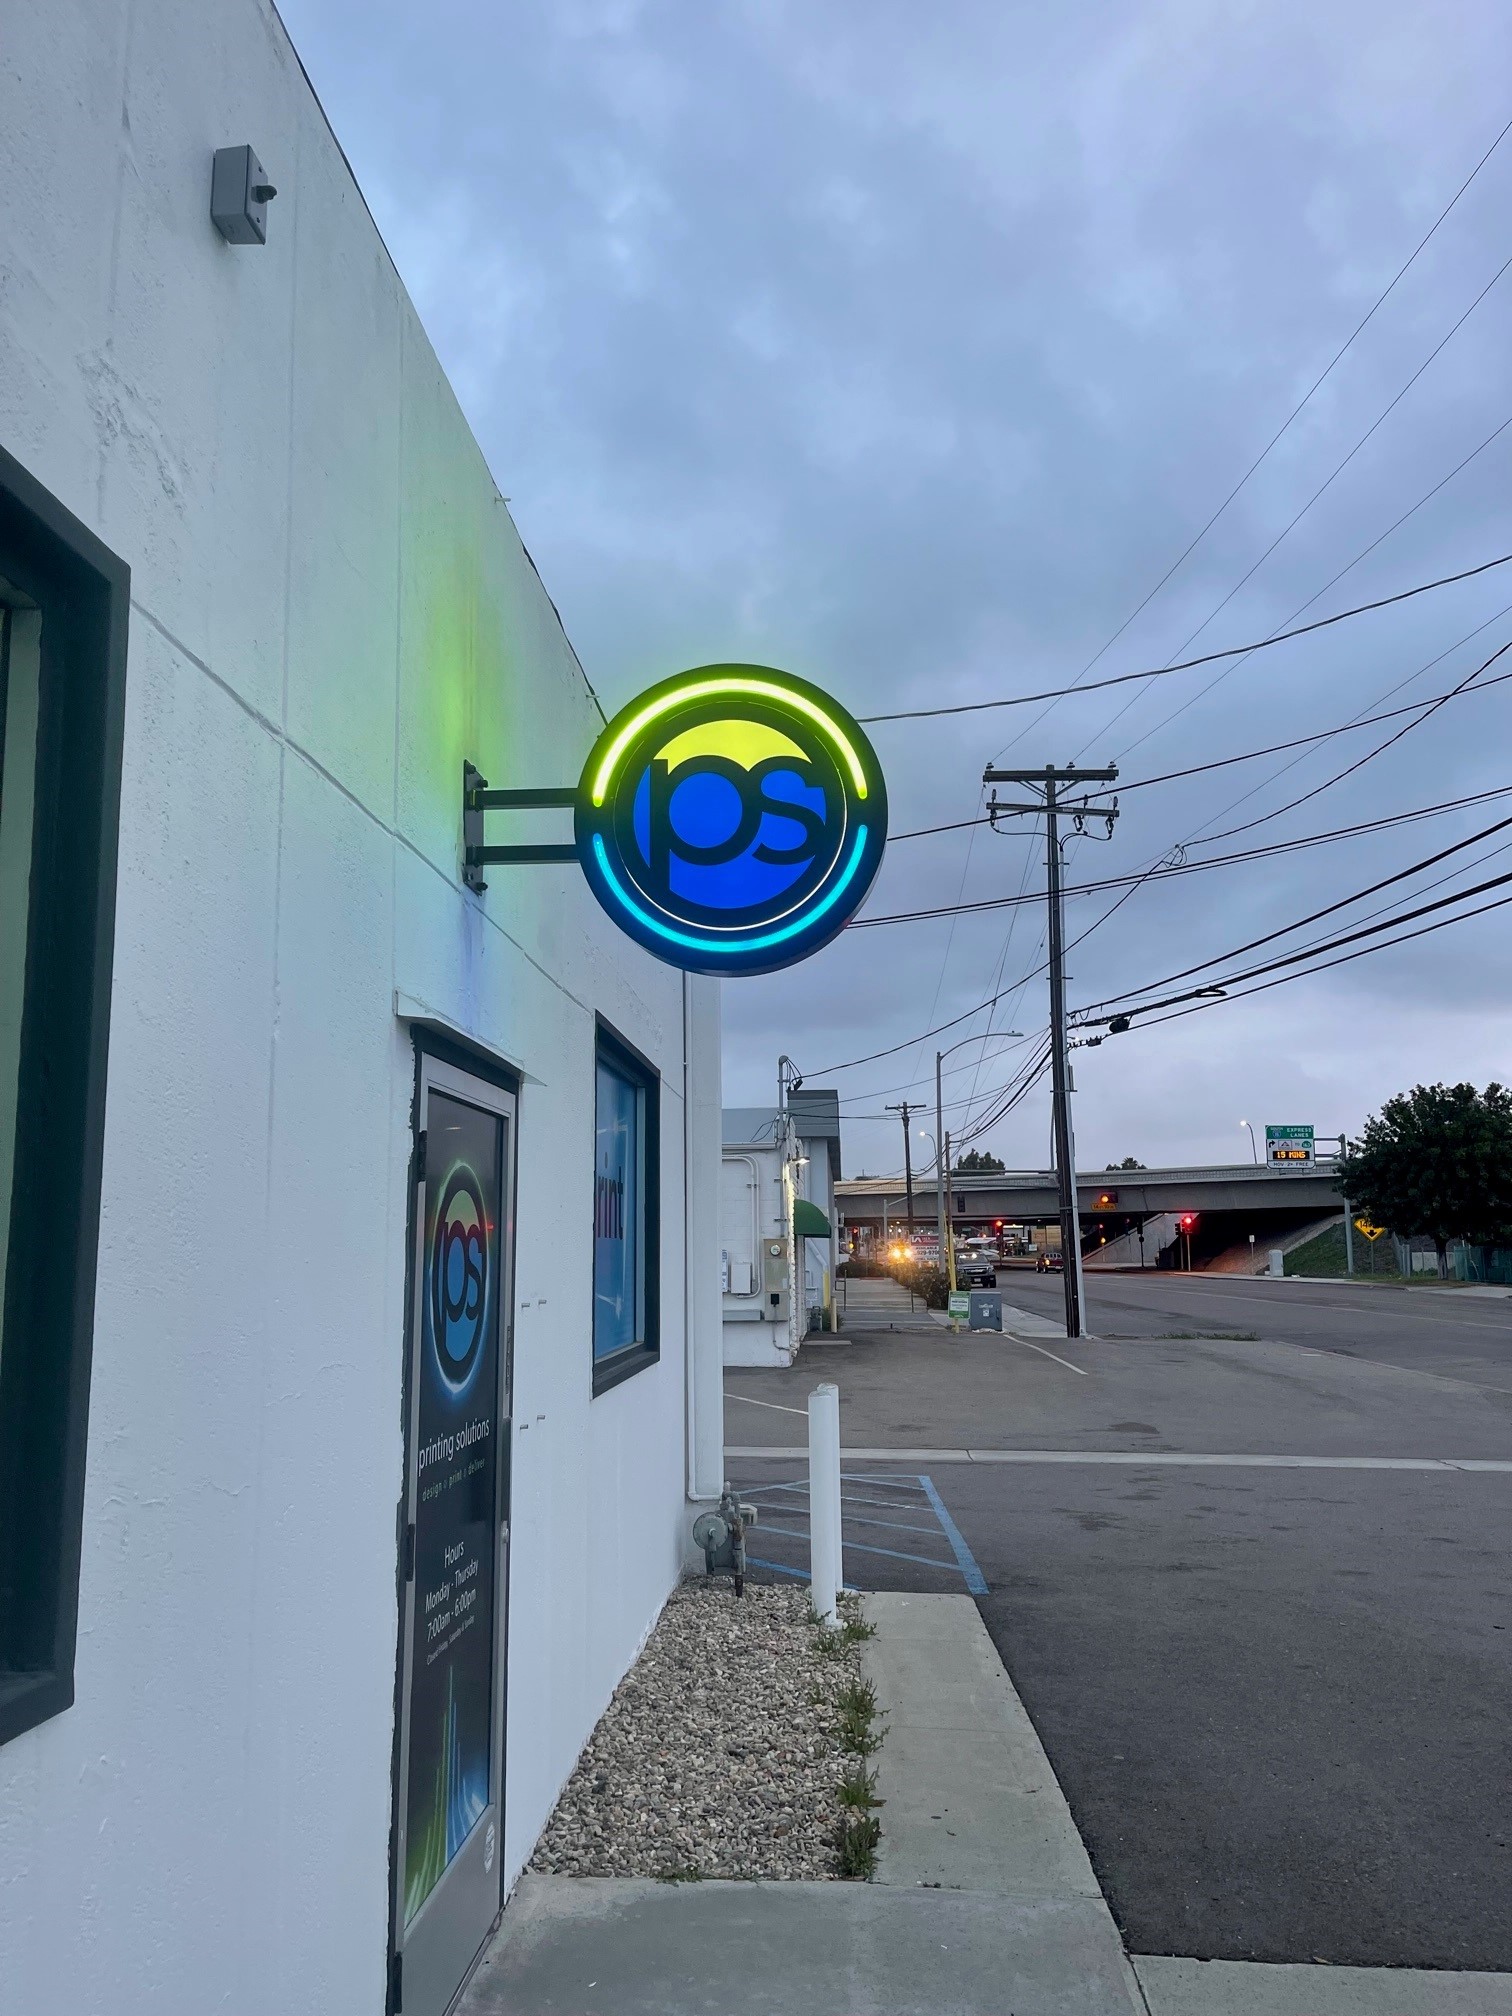 Neon Building Signs in North County CA